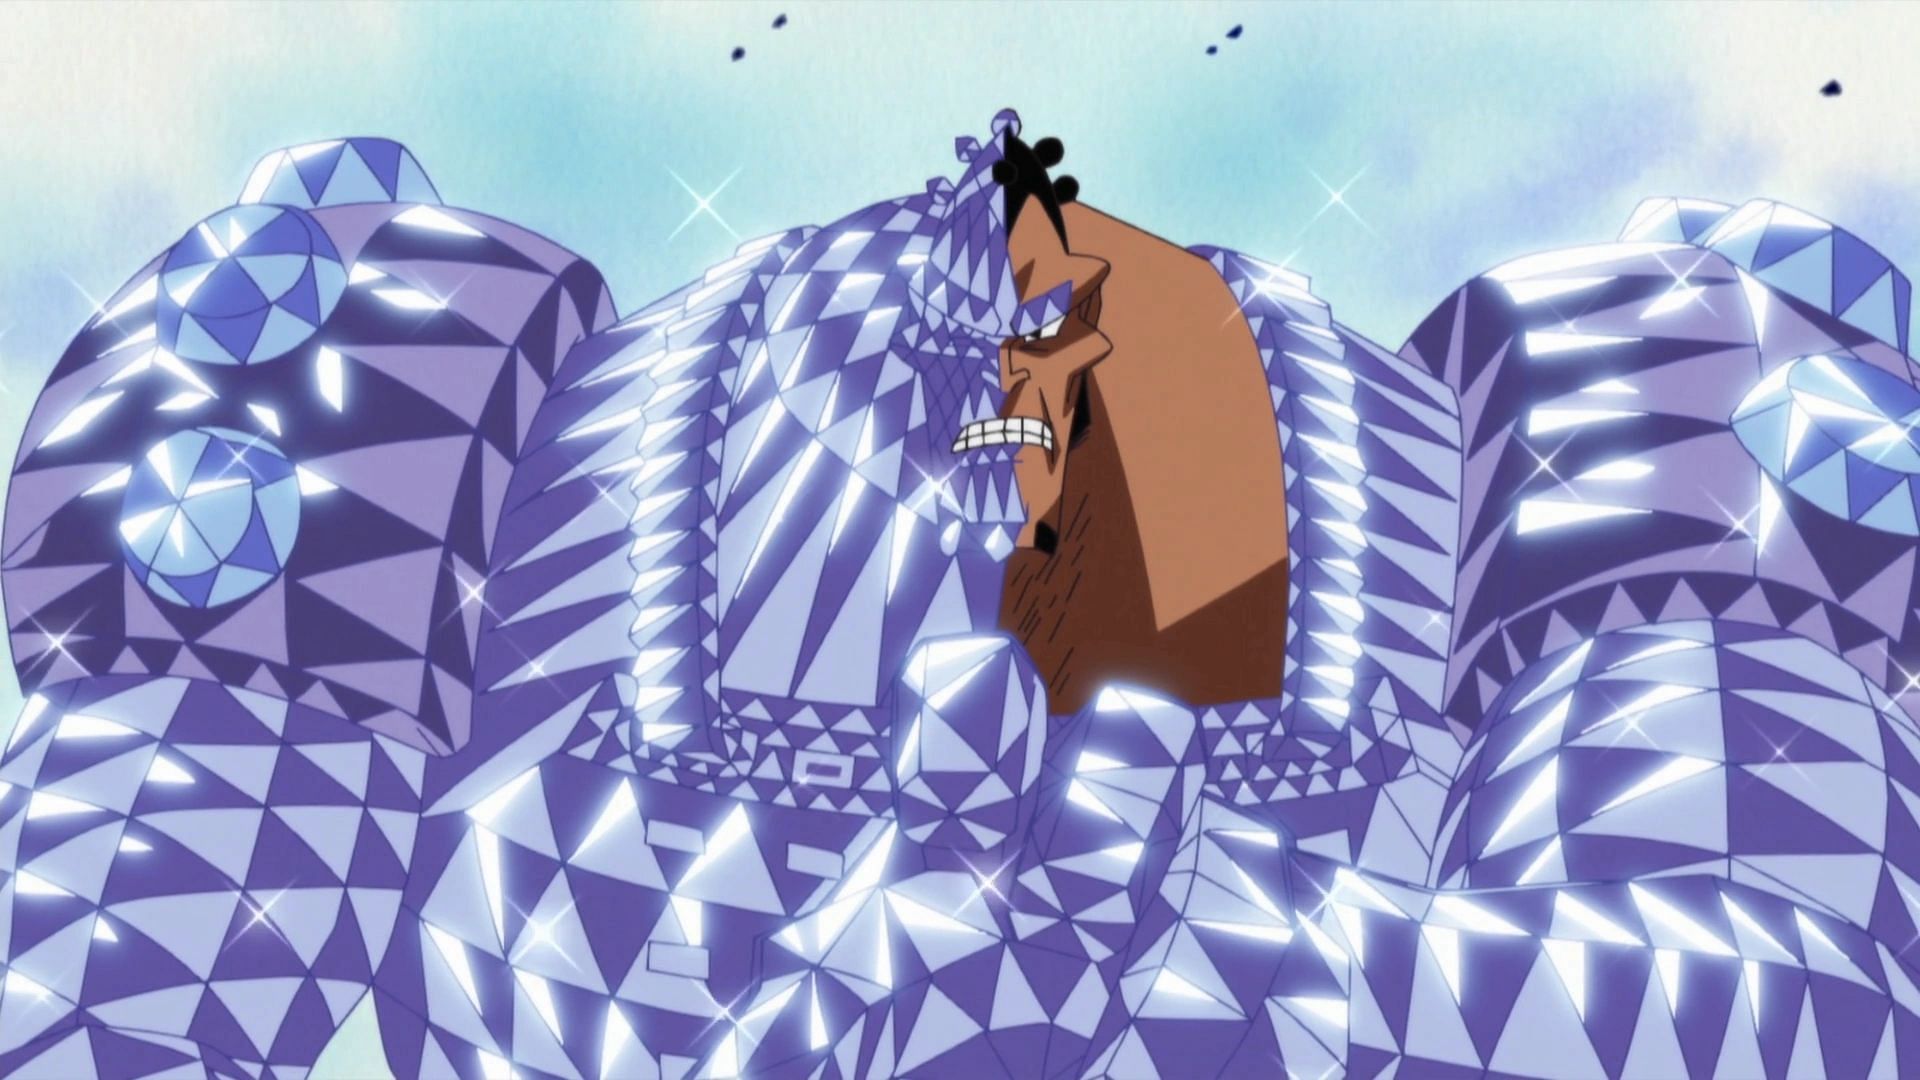 Jozu (Image via Toei Animation, One Piece)